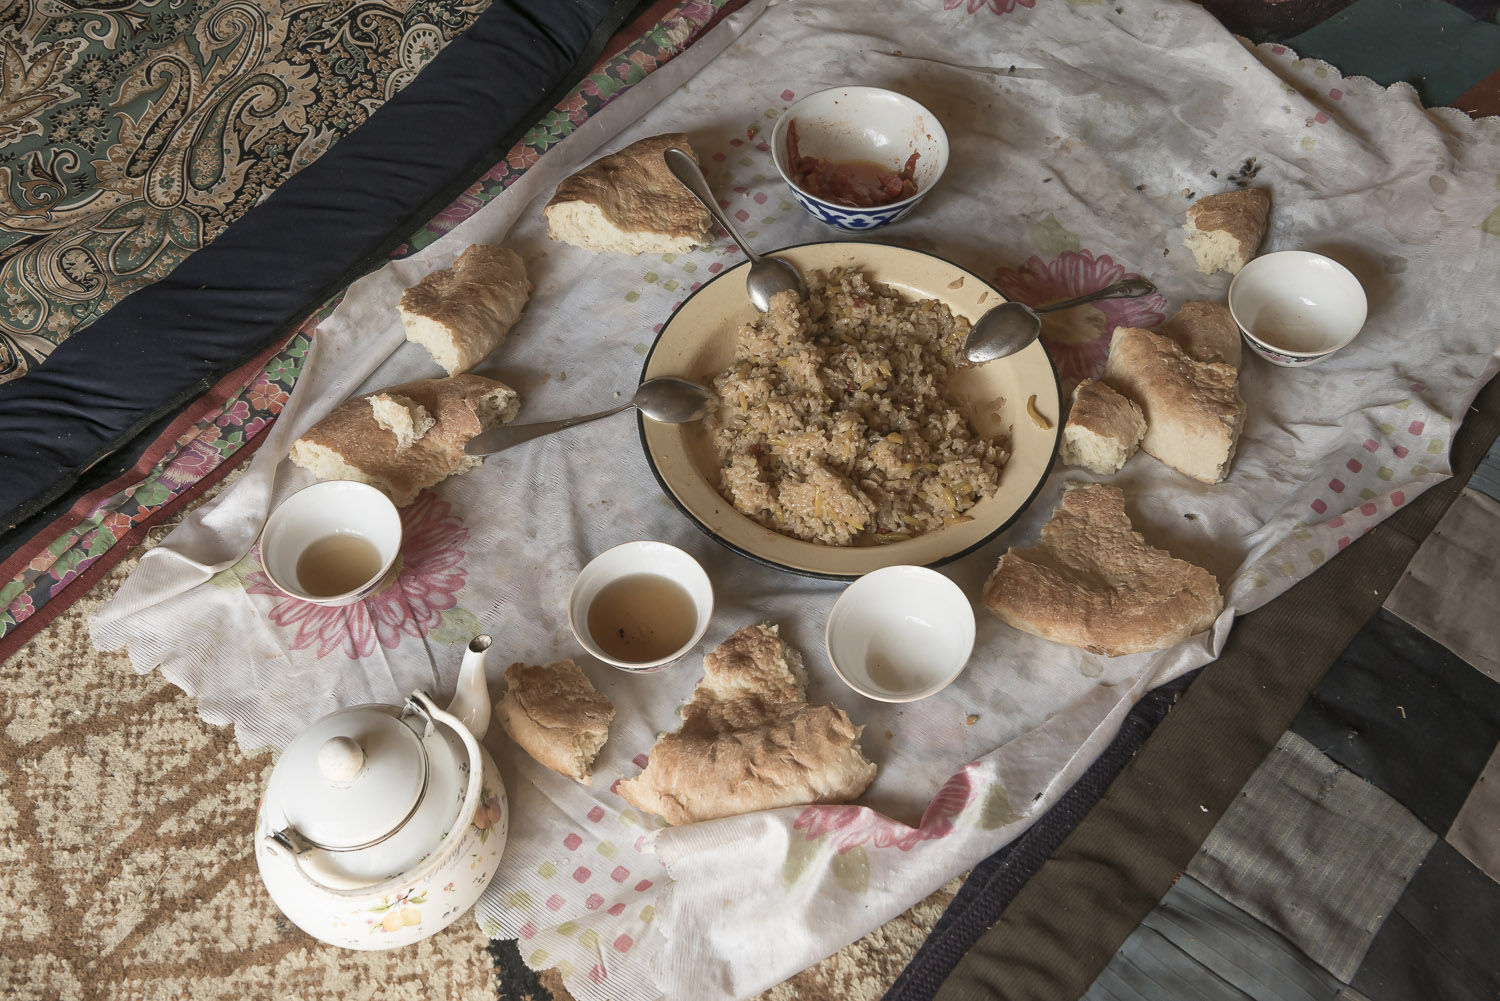 kyrgyzstan-picnic-tea-and-bread-jo-kearney-photography-video.jpg